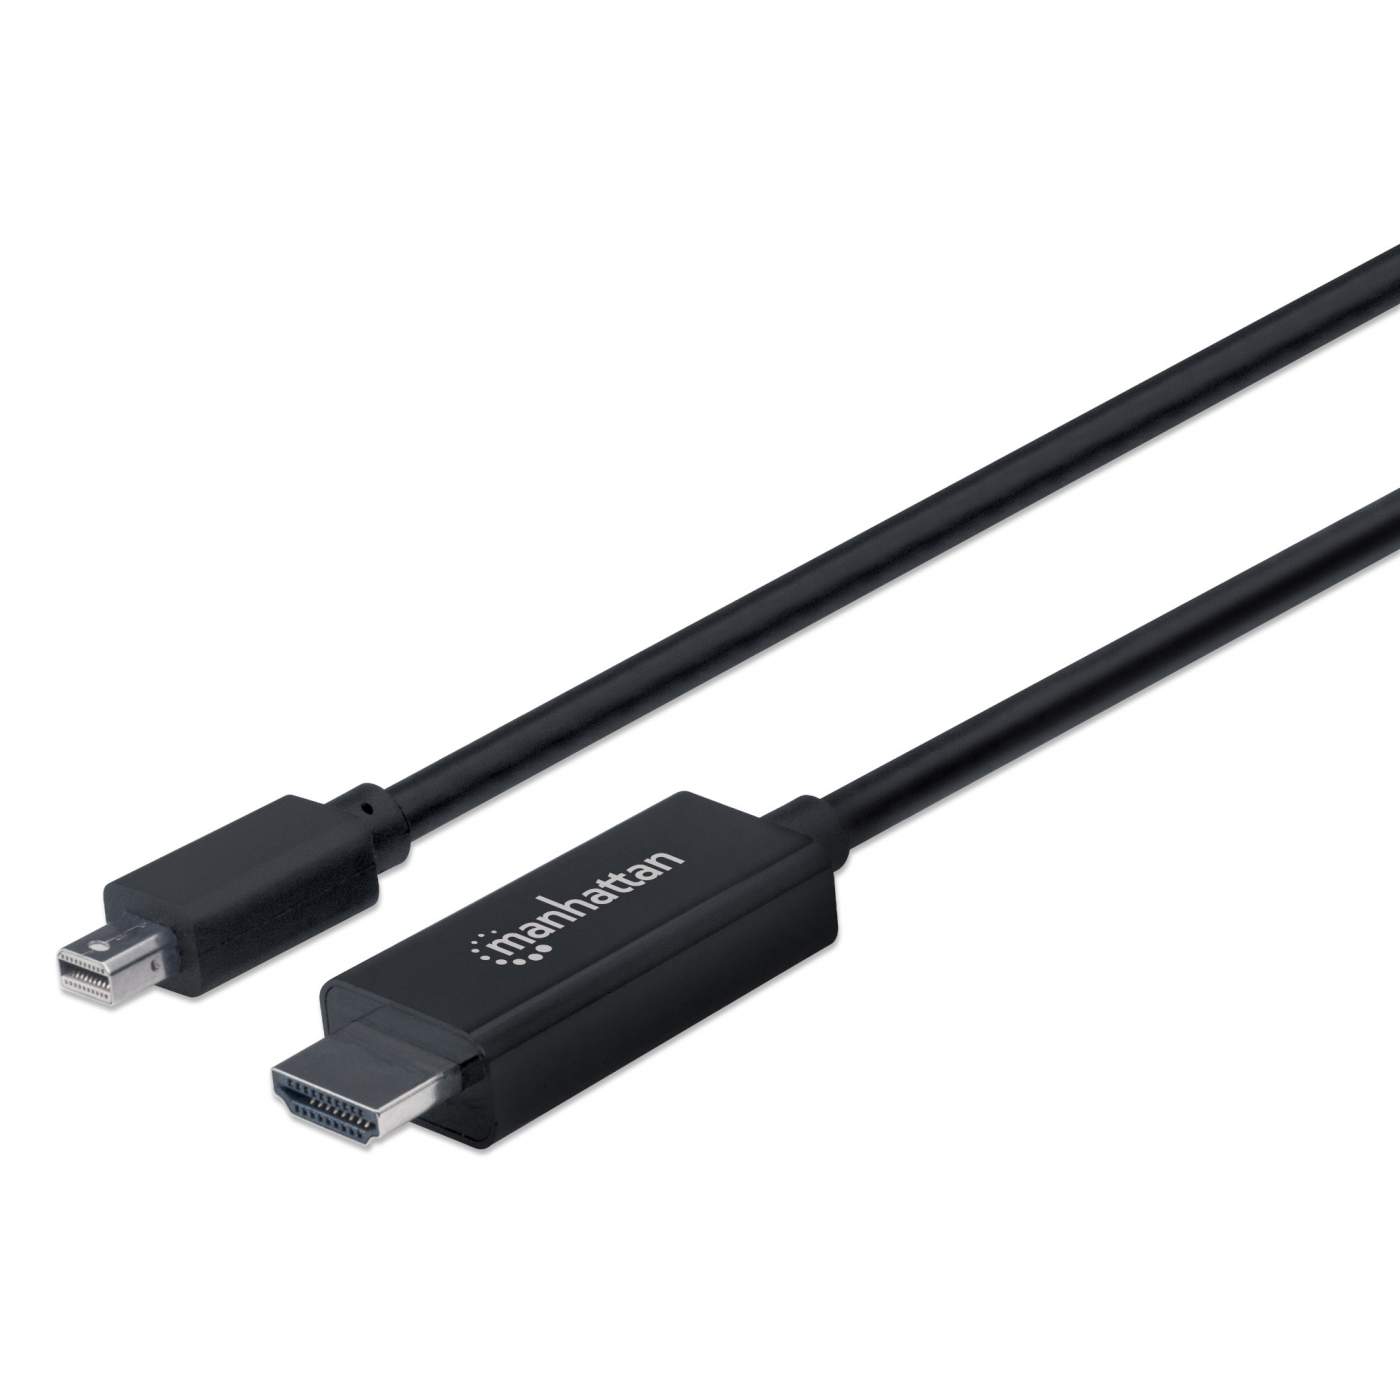 4K@60Hz Mini DisplayPort to HDMI Cable Image 1